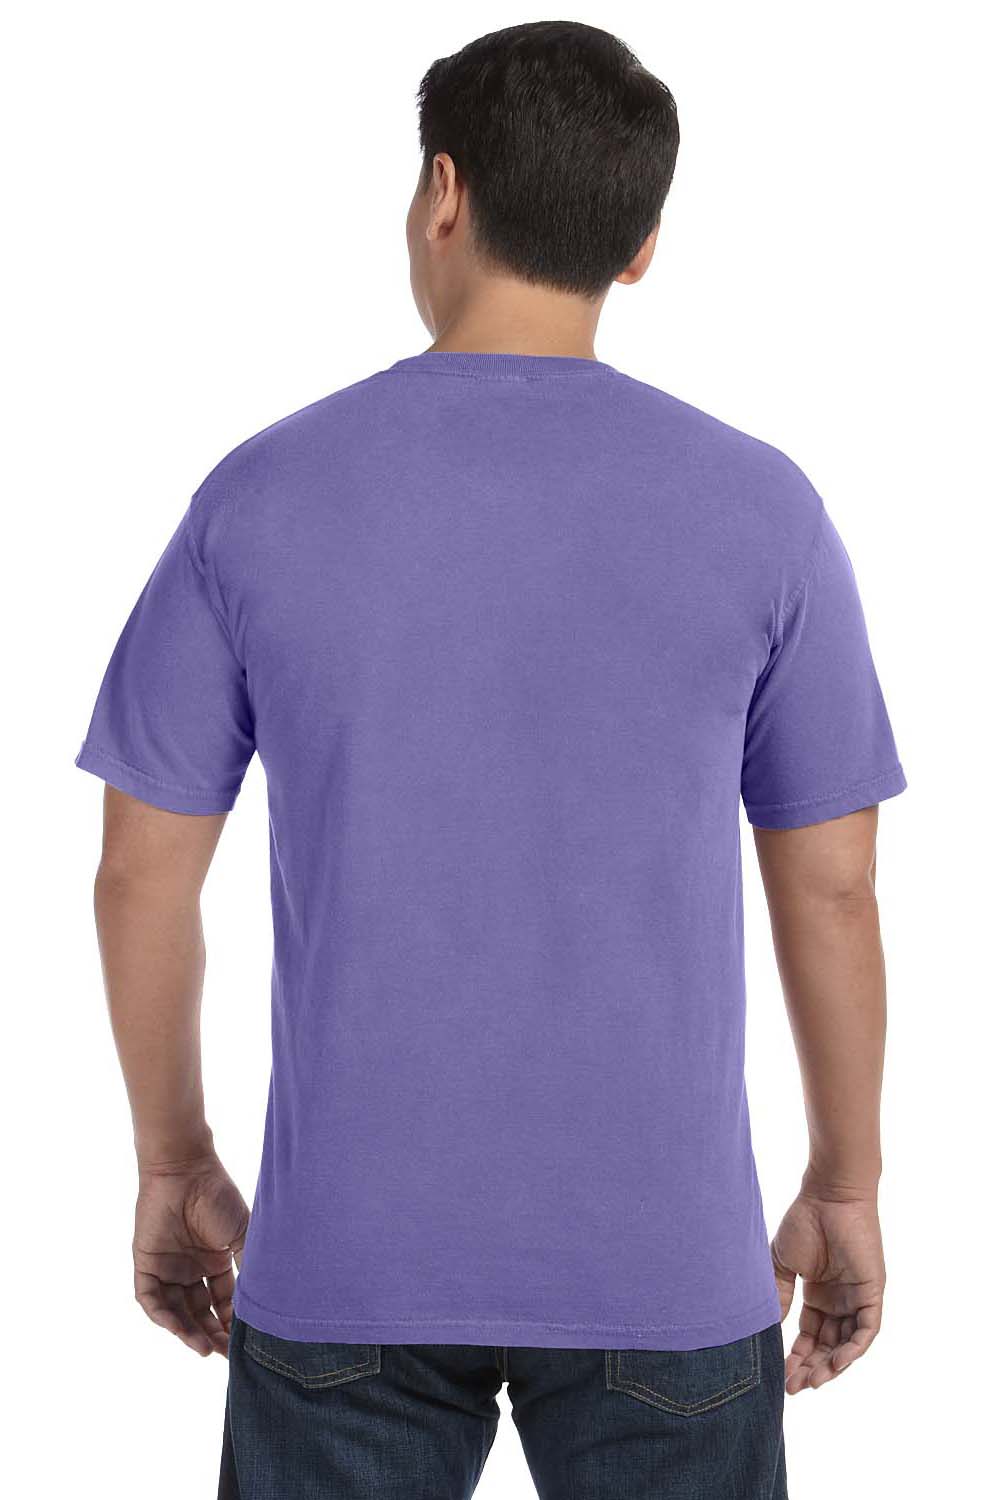 Comfort Colors C1717 Mens Short Sleeve Crewneck T-Shirt Violet Purple Back